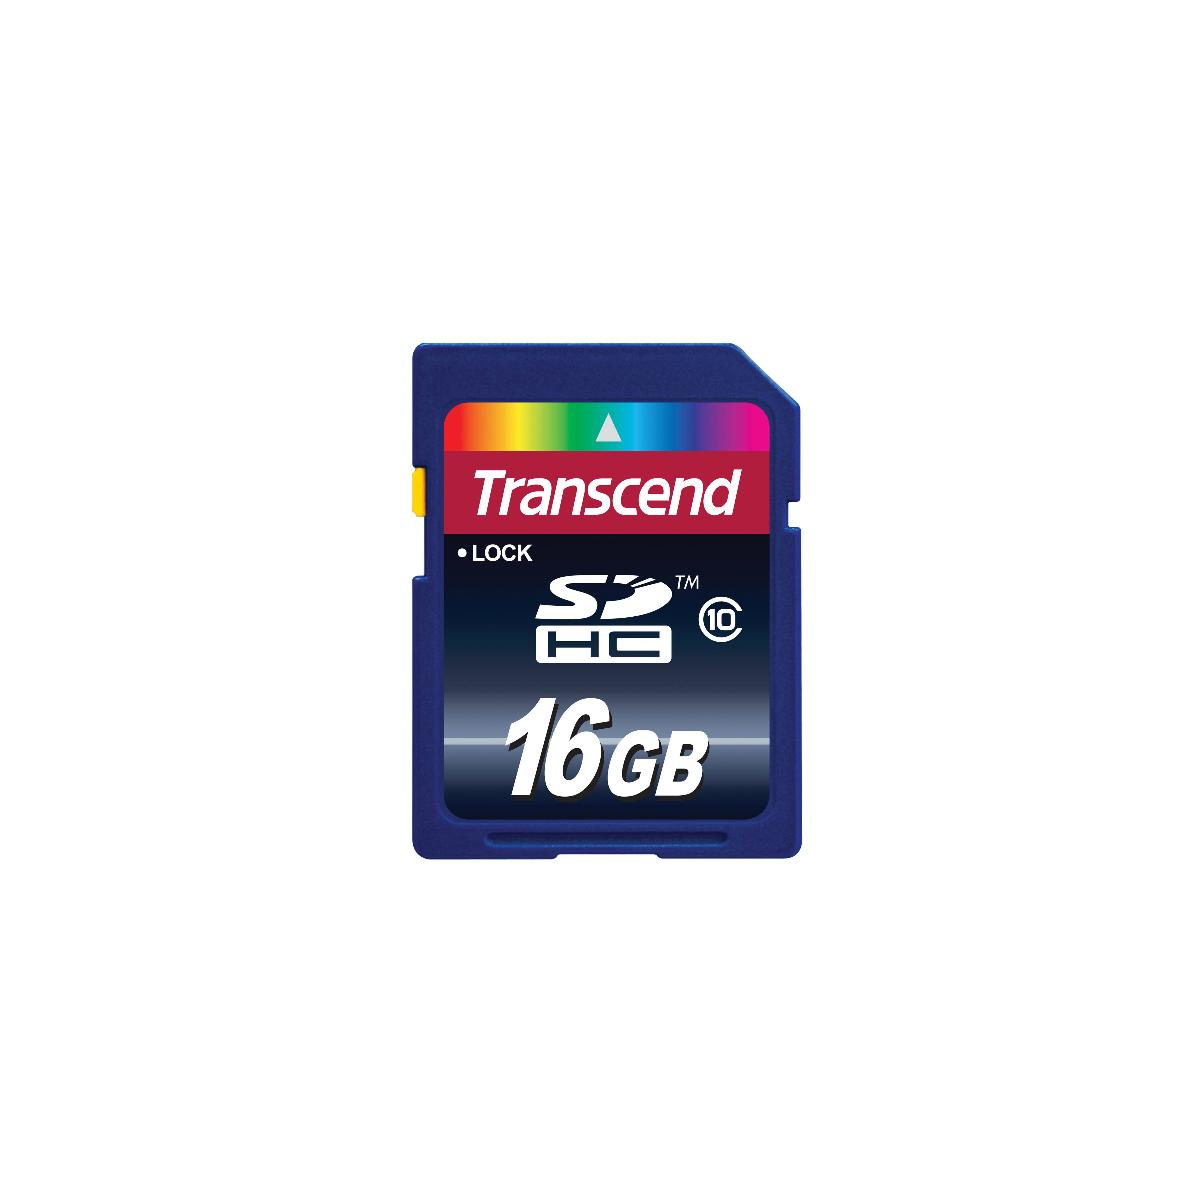 TRANSCEND TS16GSDHC10, SDHC Speicherkarte, 16 20 GB, MB/s